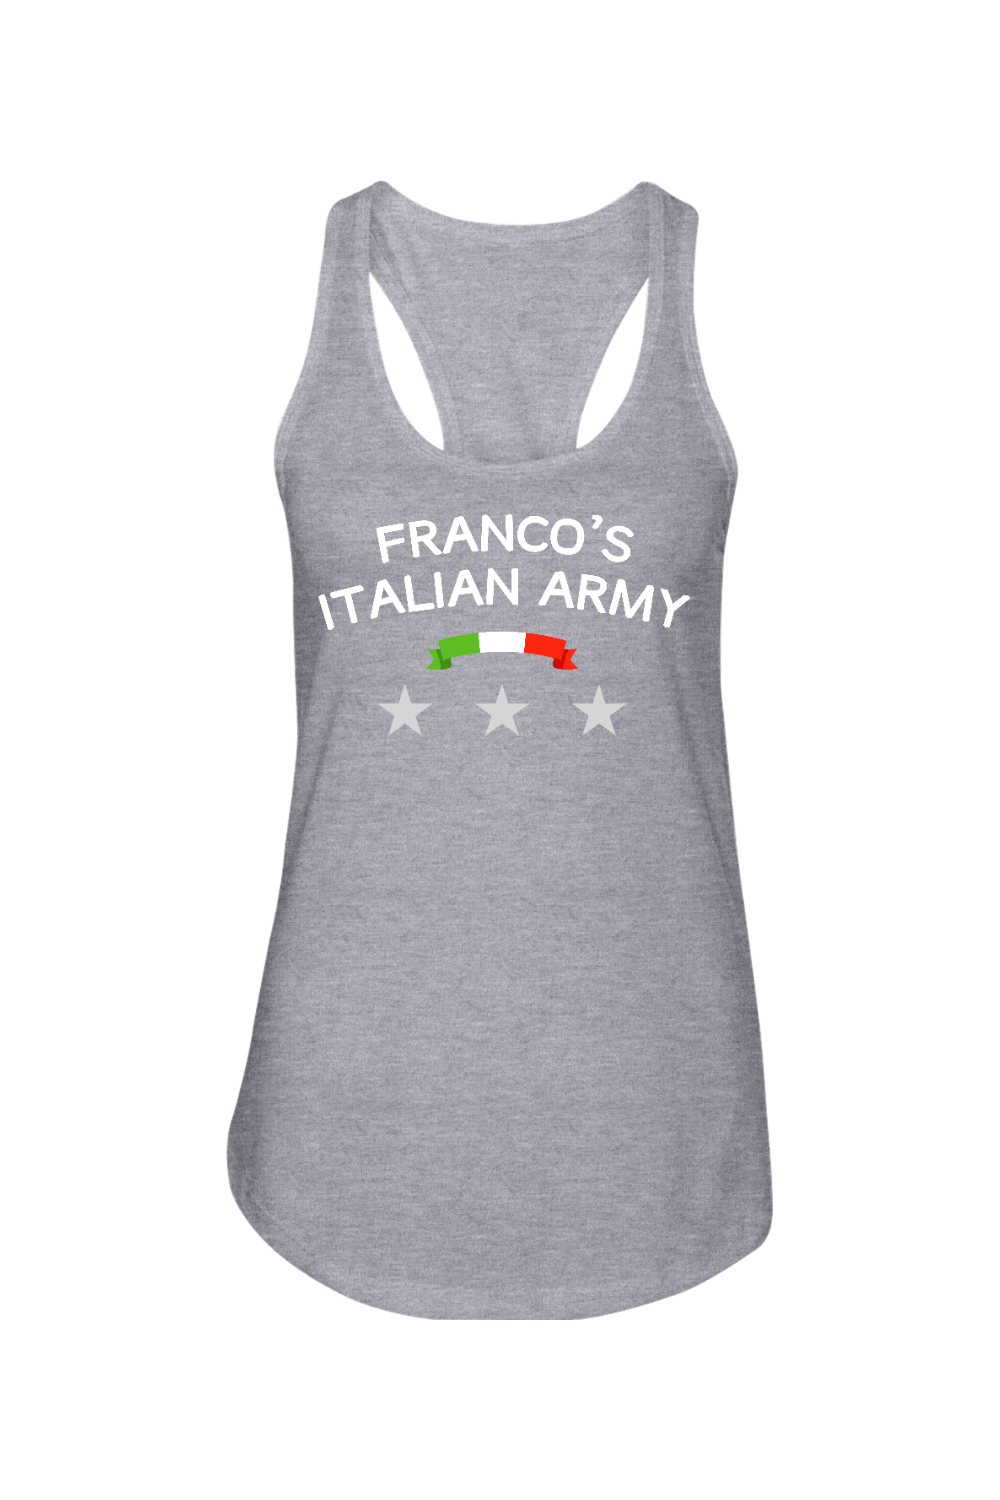 Franco's Italian Army - Ladies Racerback Tank - Yinzylvania